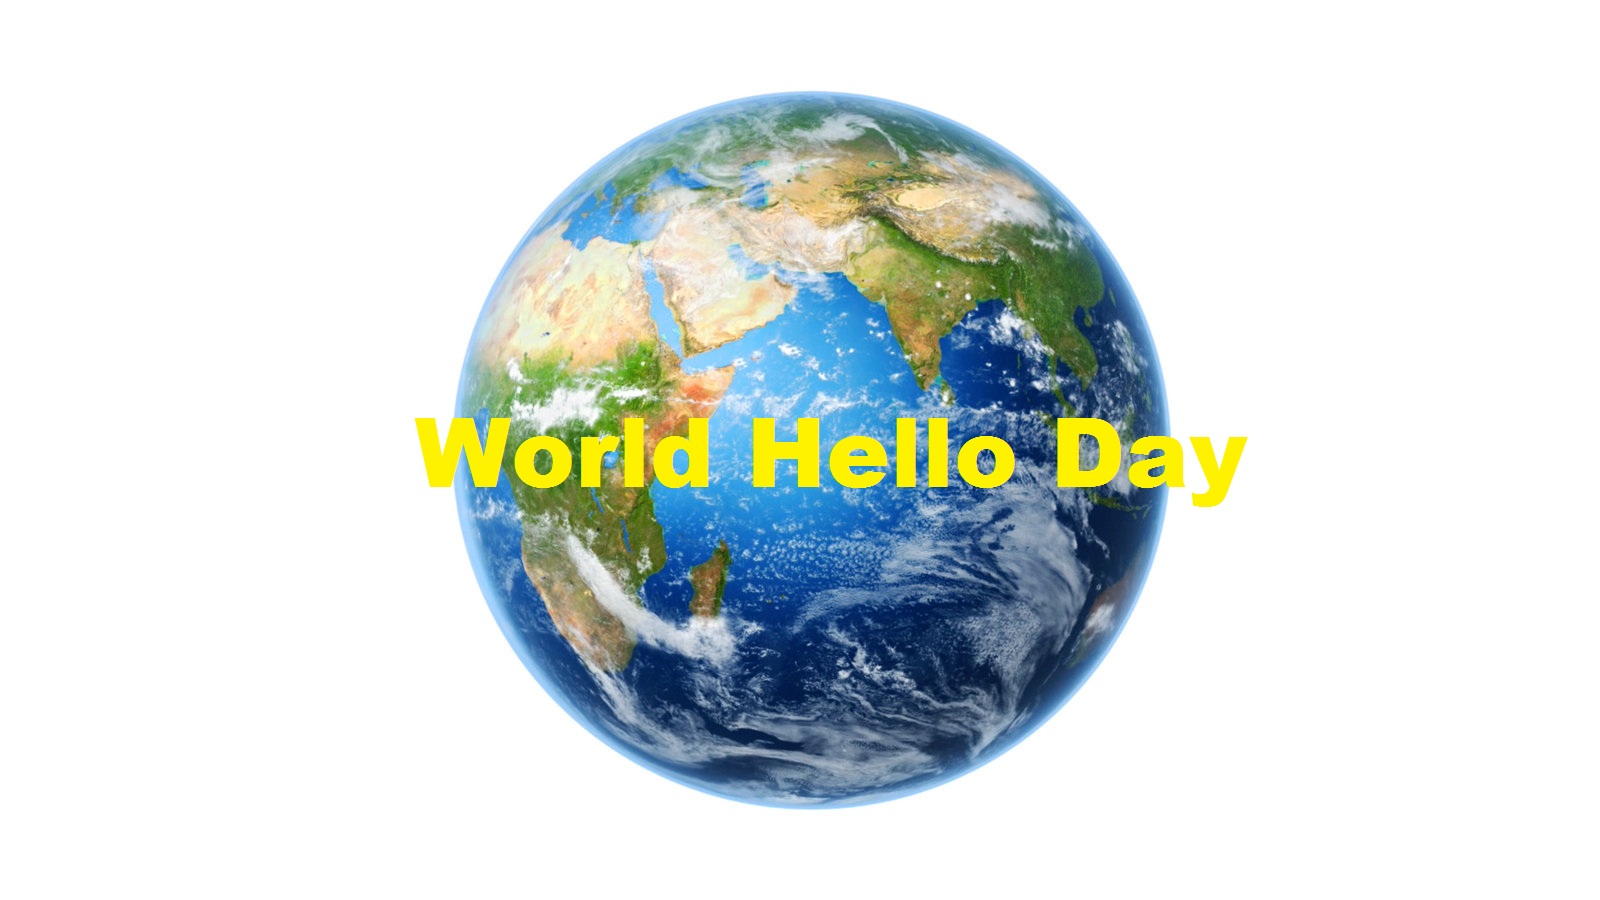 World Hello Day